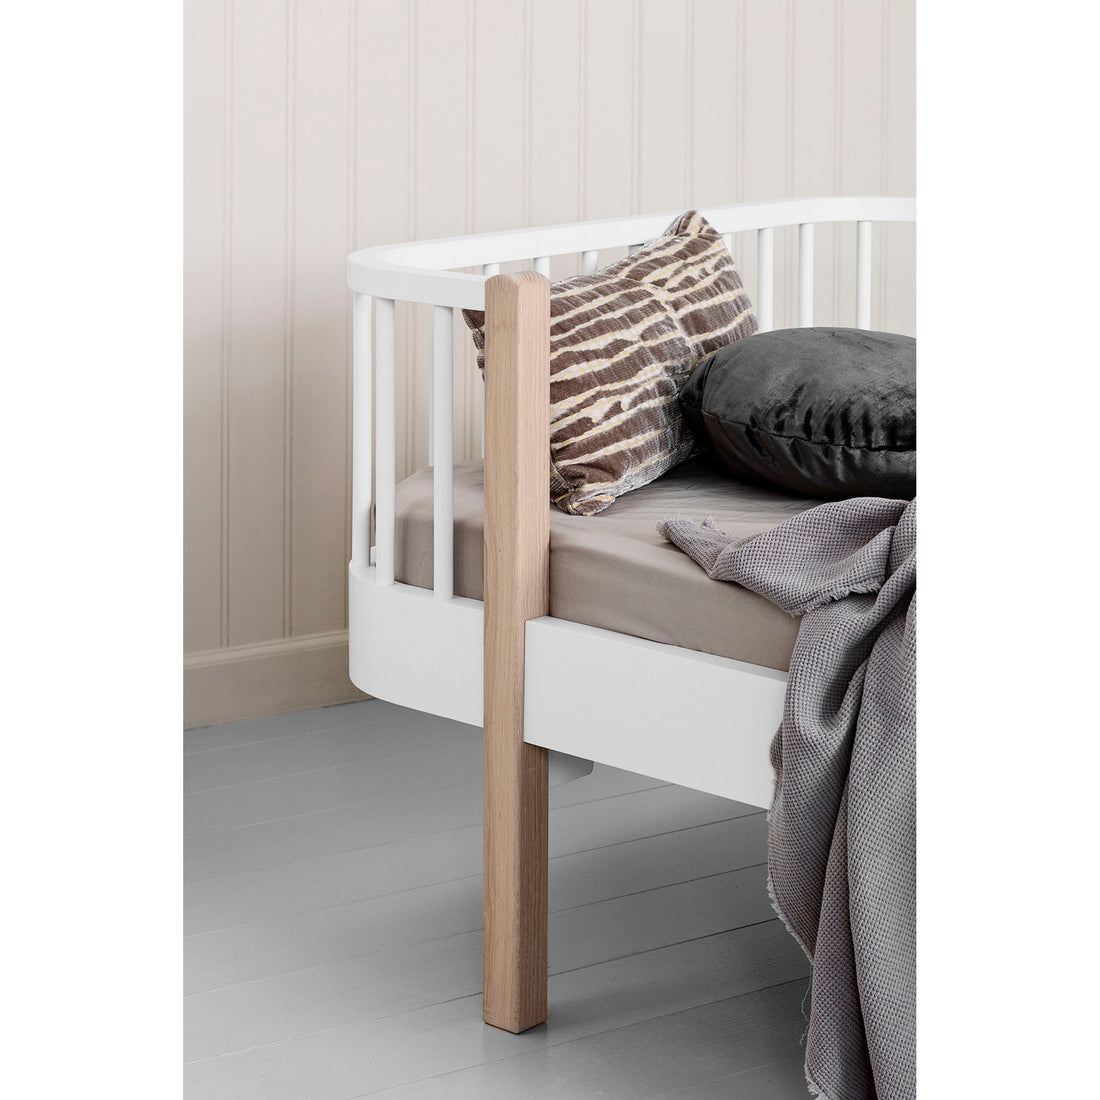 oliver-furniture-wood-bed-white- (9)